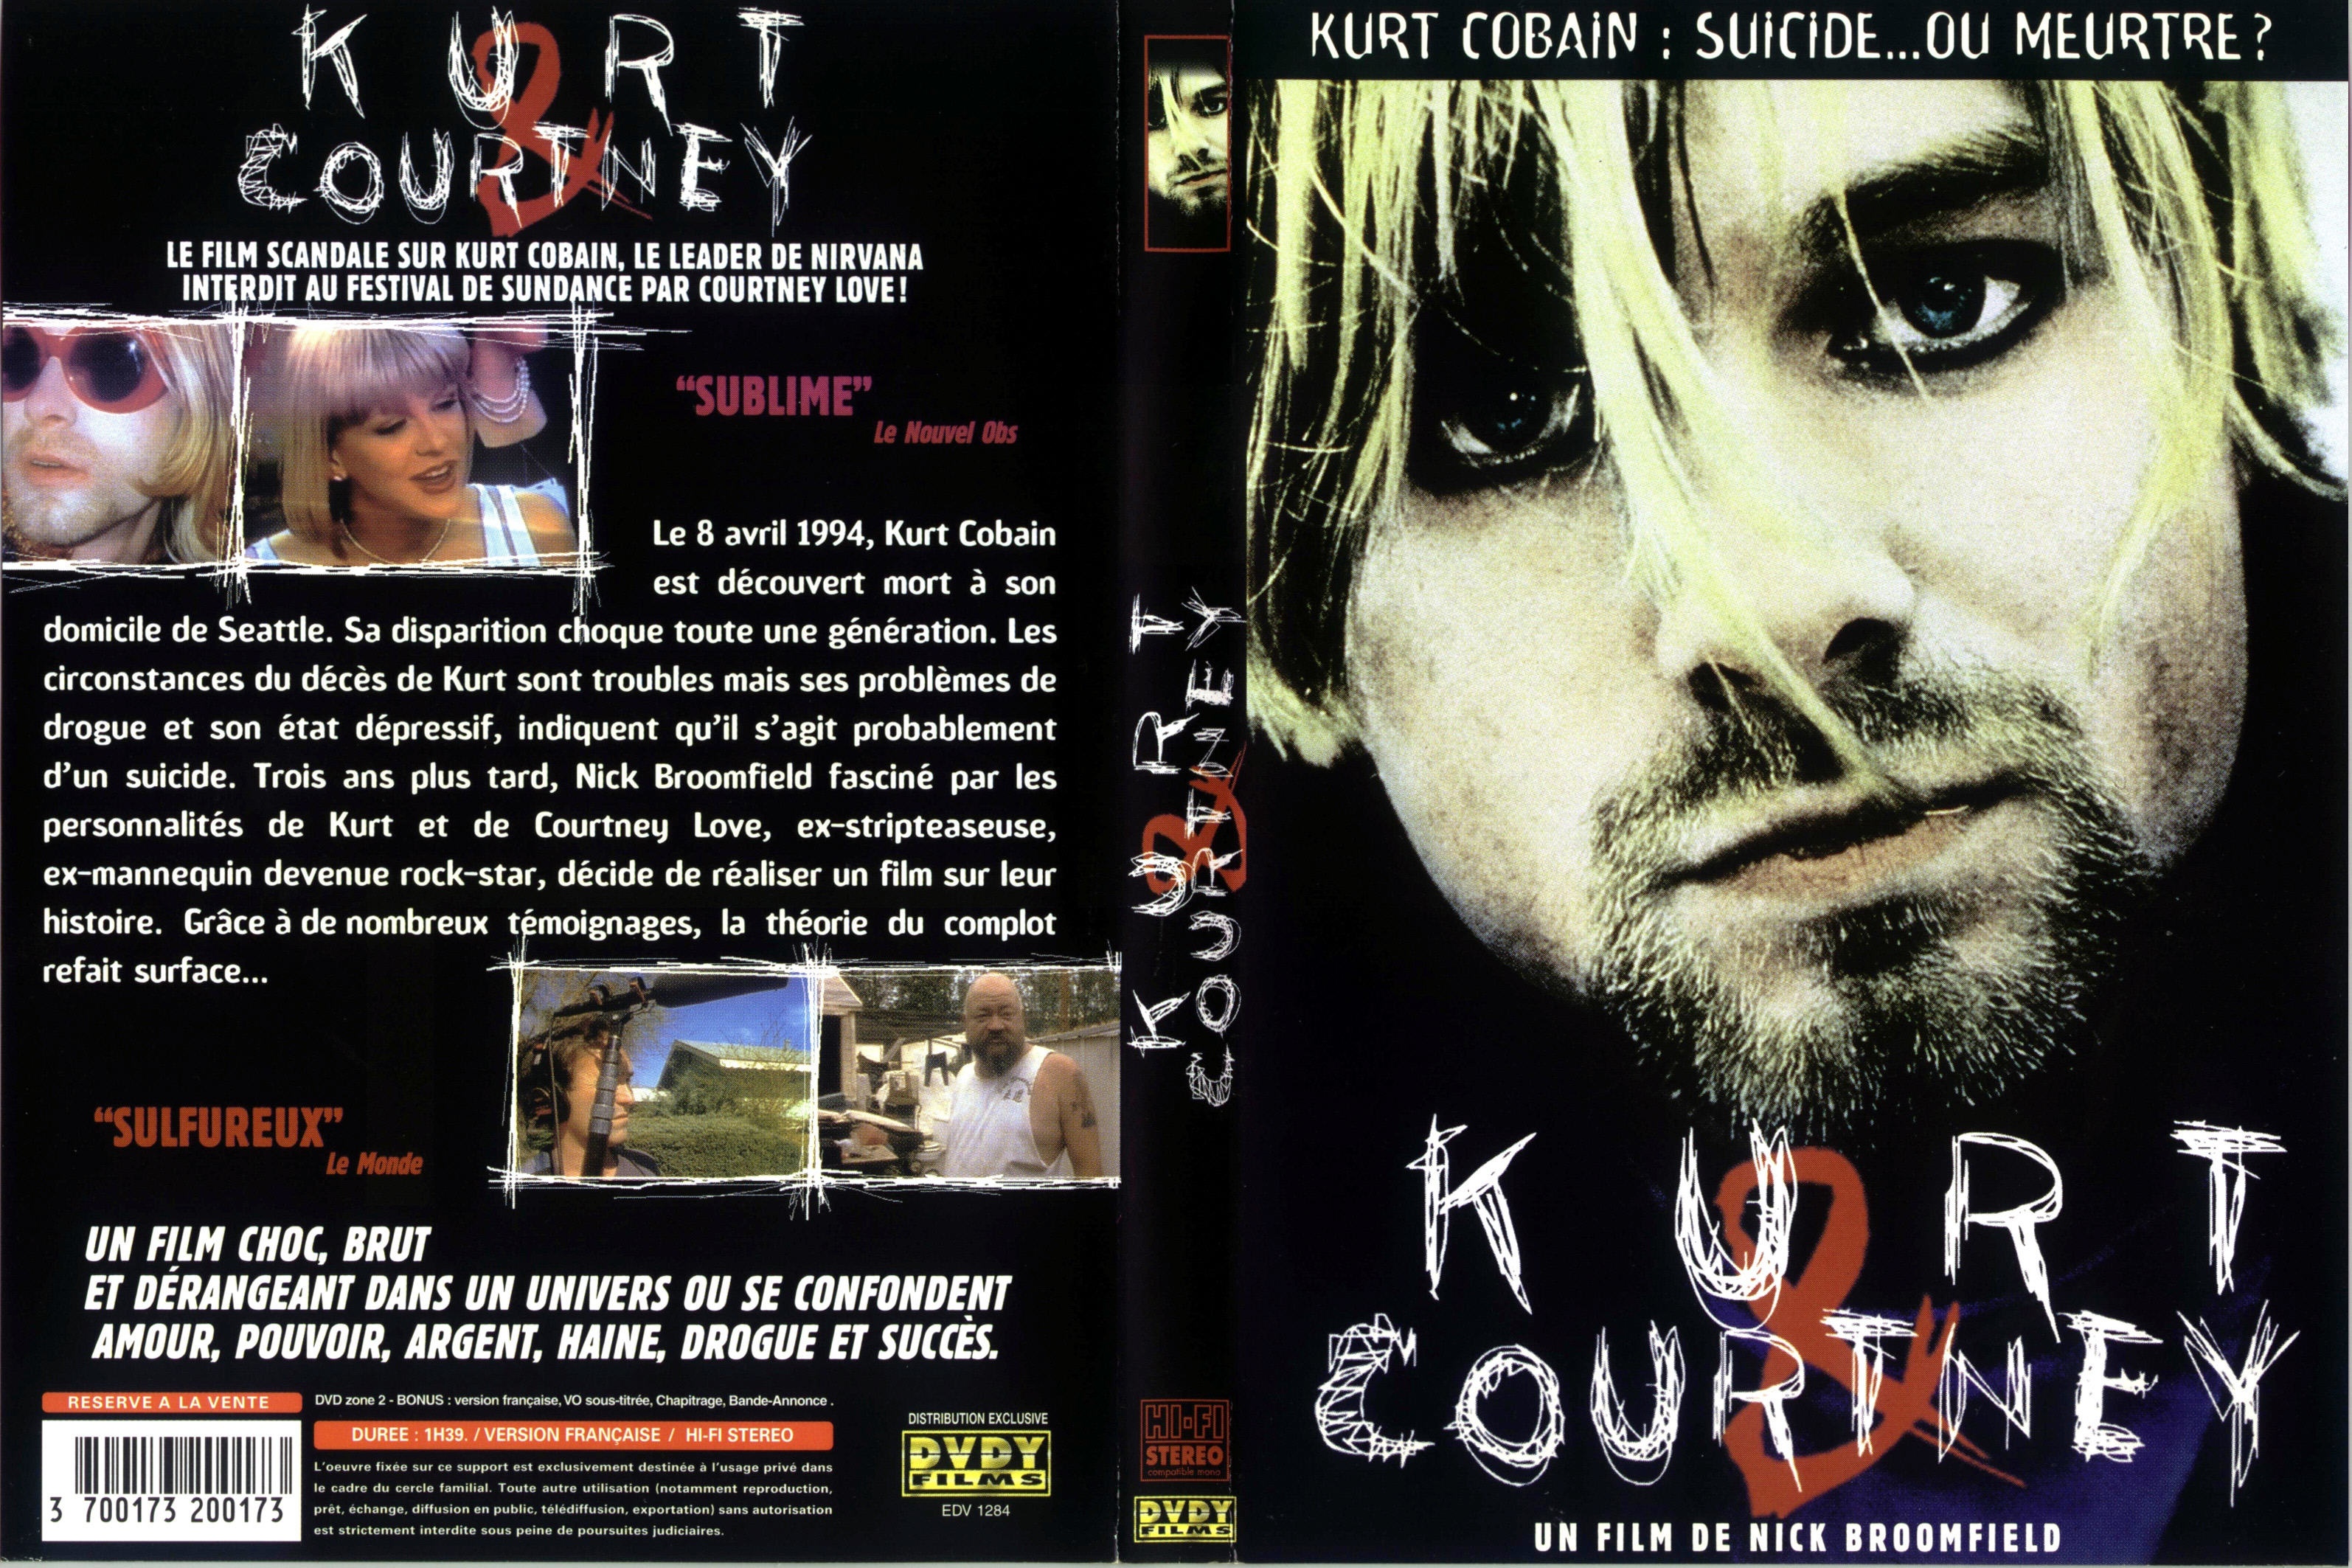 Jaquette DVD Kurt and Courtney